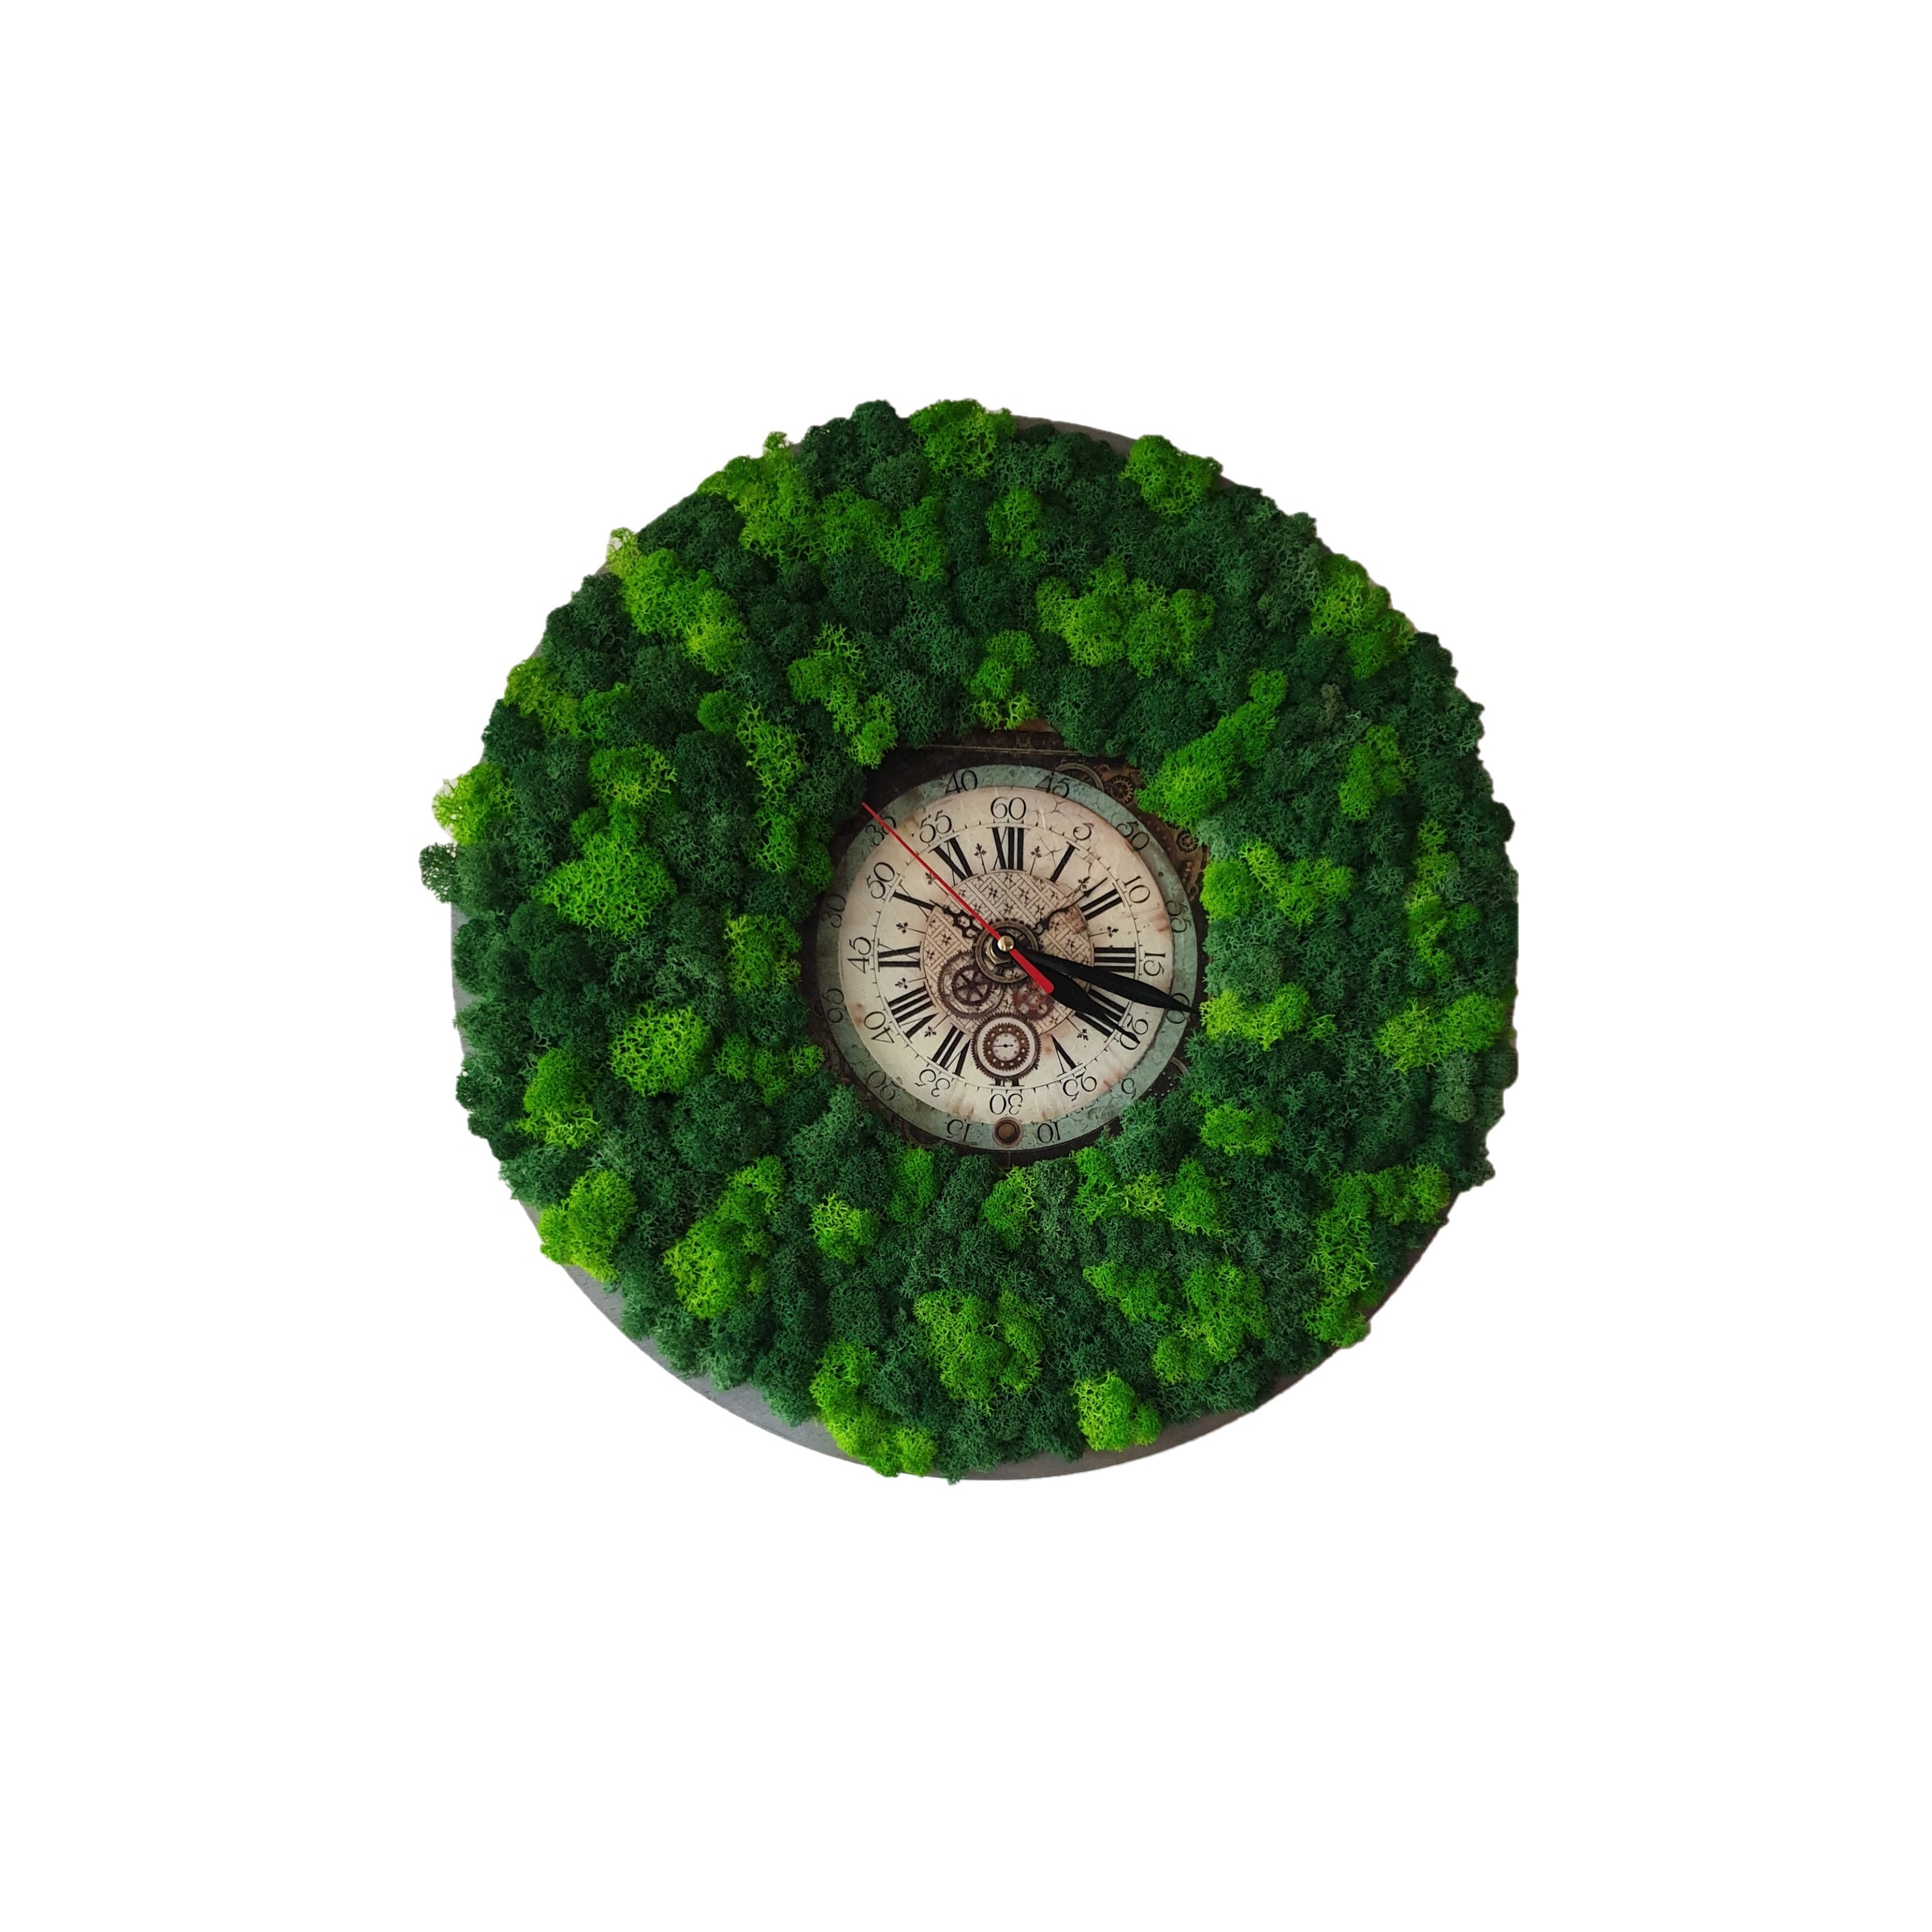 Ceas decorat cu licheni stabilizați, 40 cm diametru